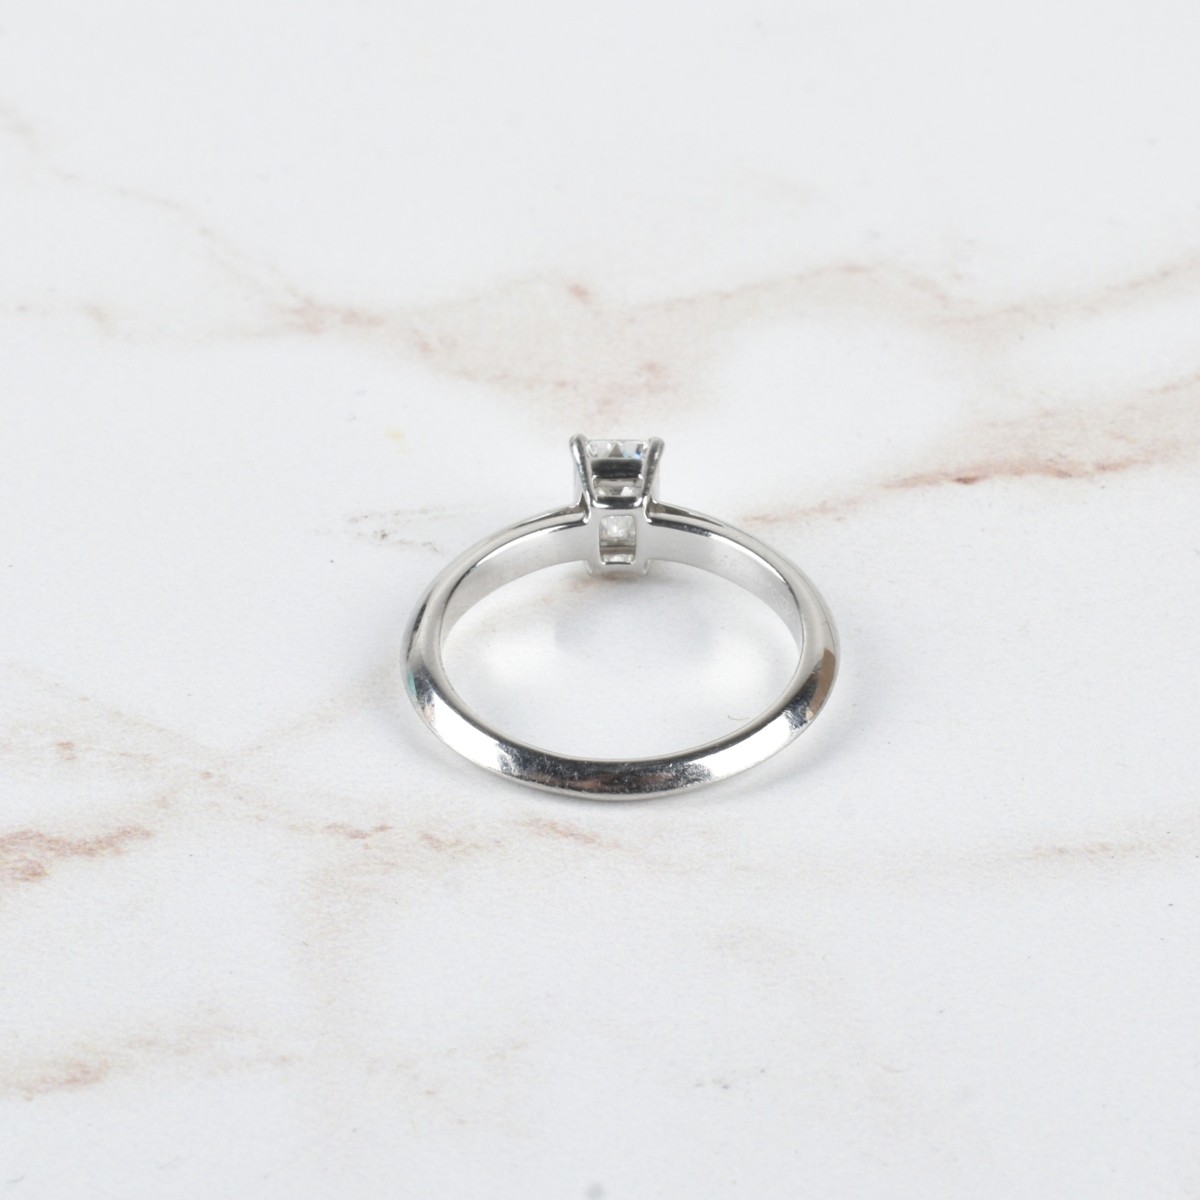 Tiffany & Co Diamond and Platinum Ring